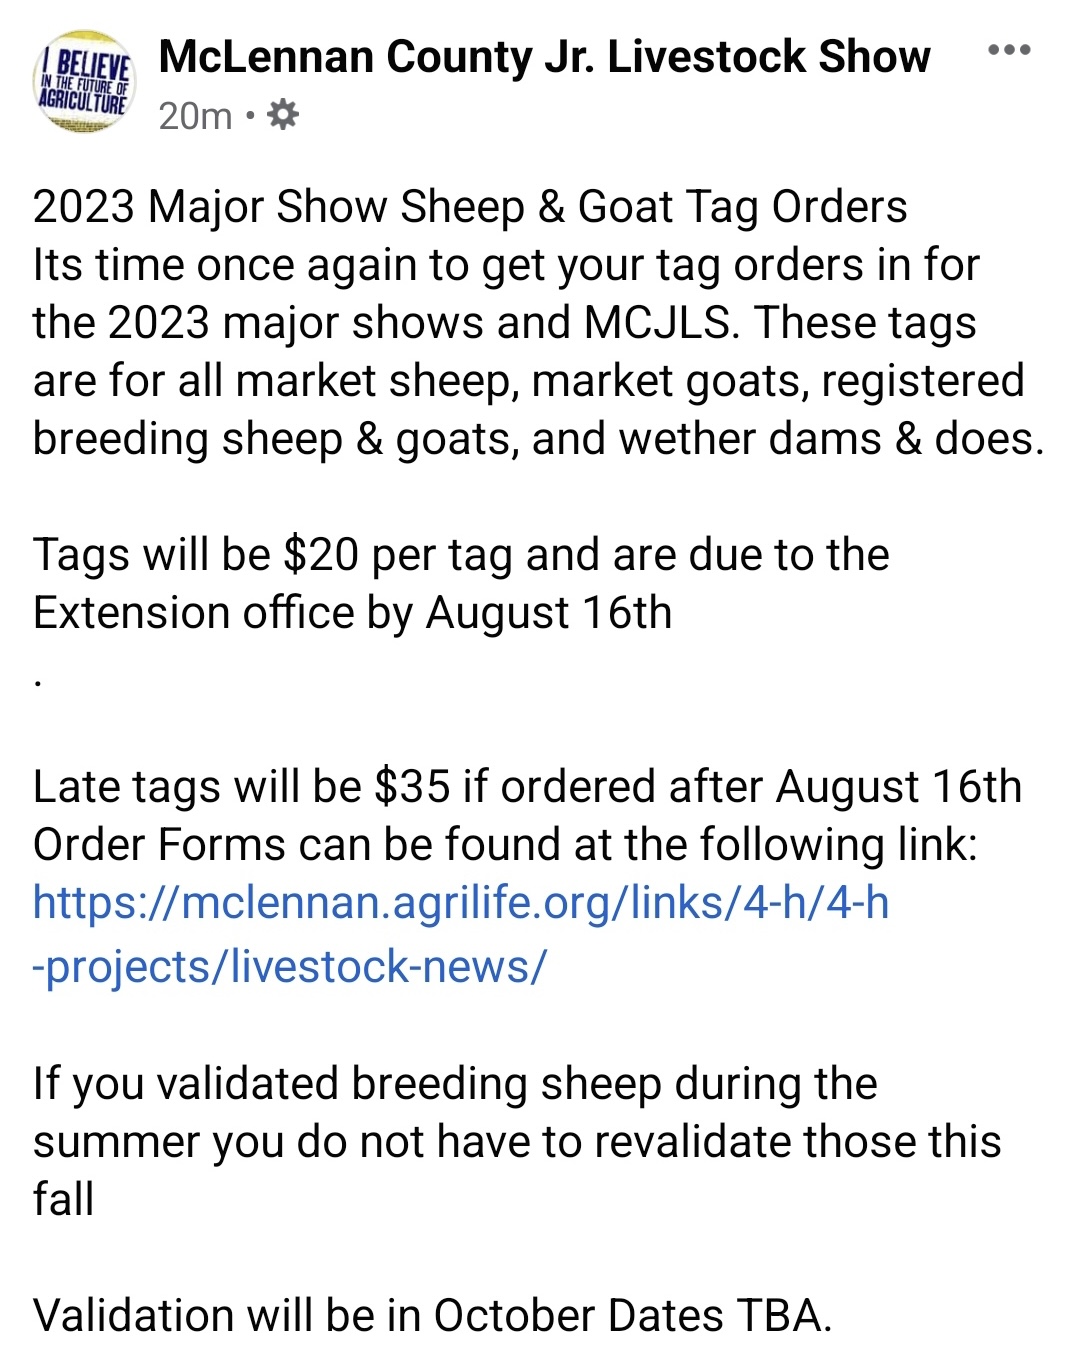 McLennan Co. Jr. Livestock Show infographic